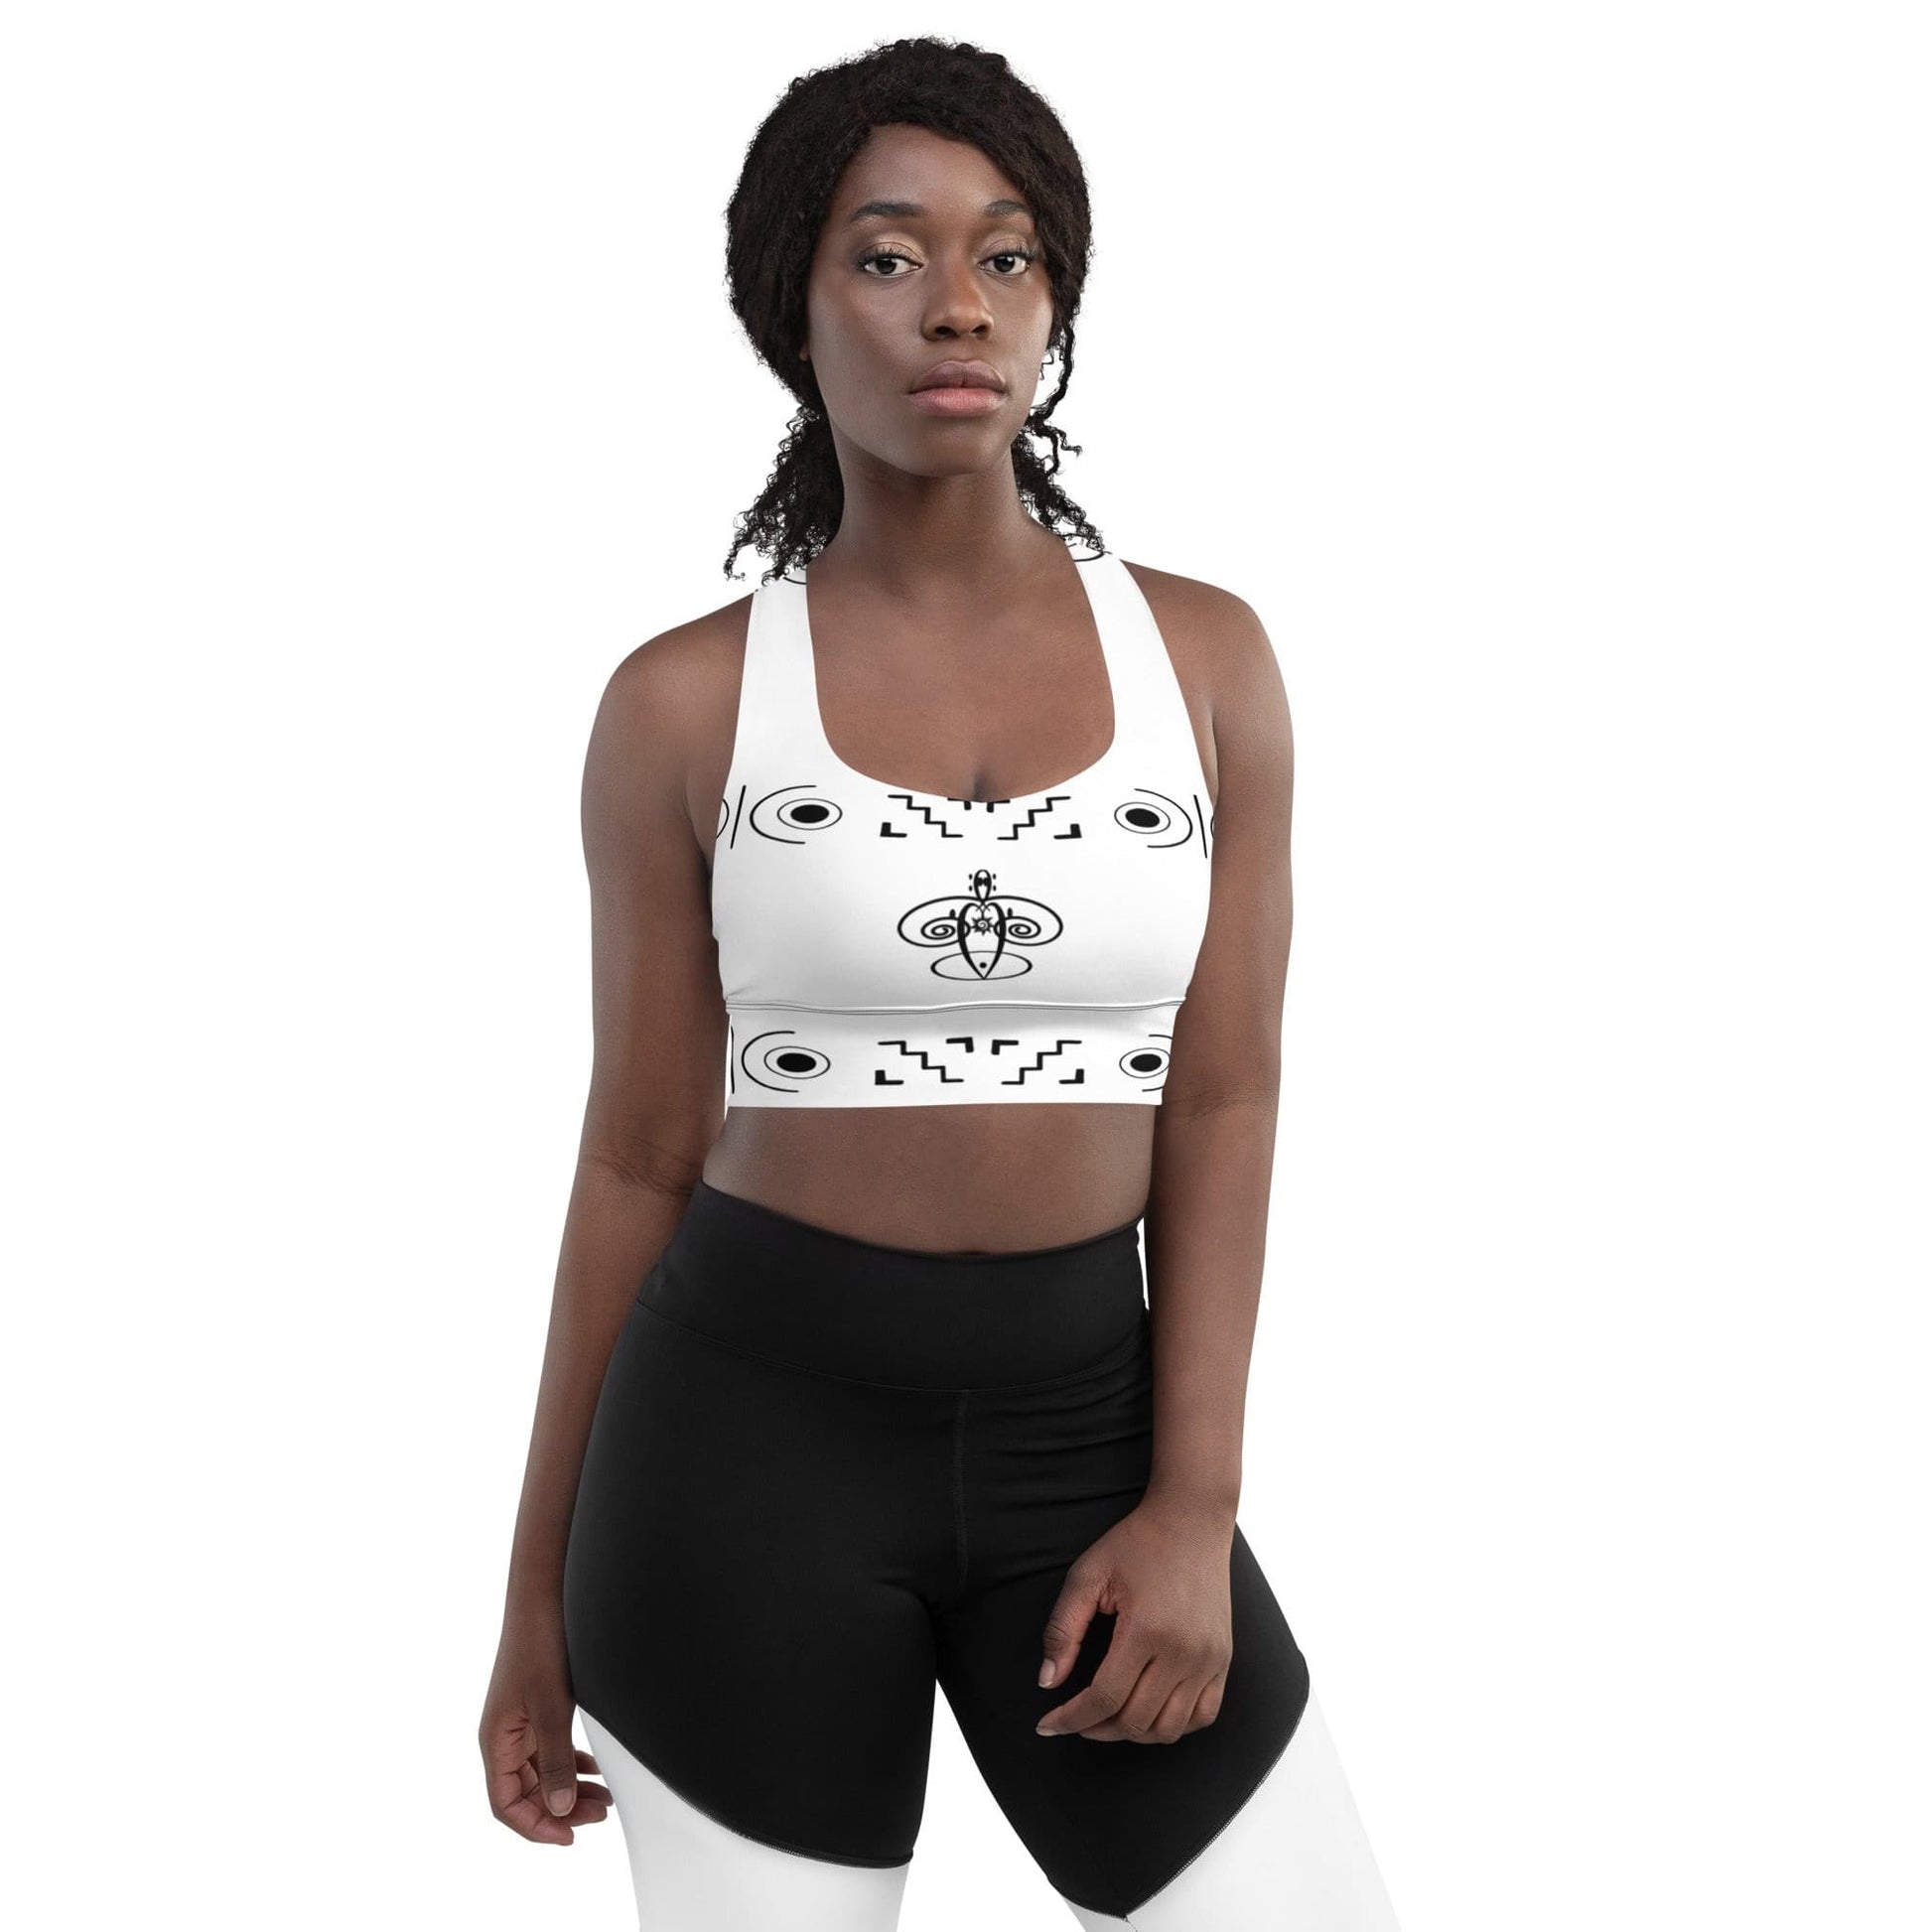 Longline sports bra 34 / Fitness Woman's bra.